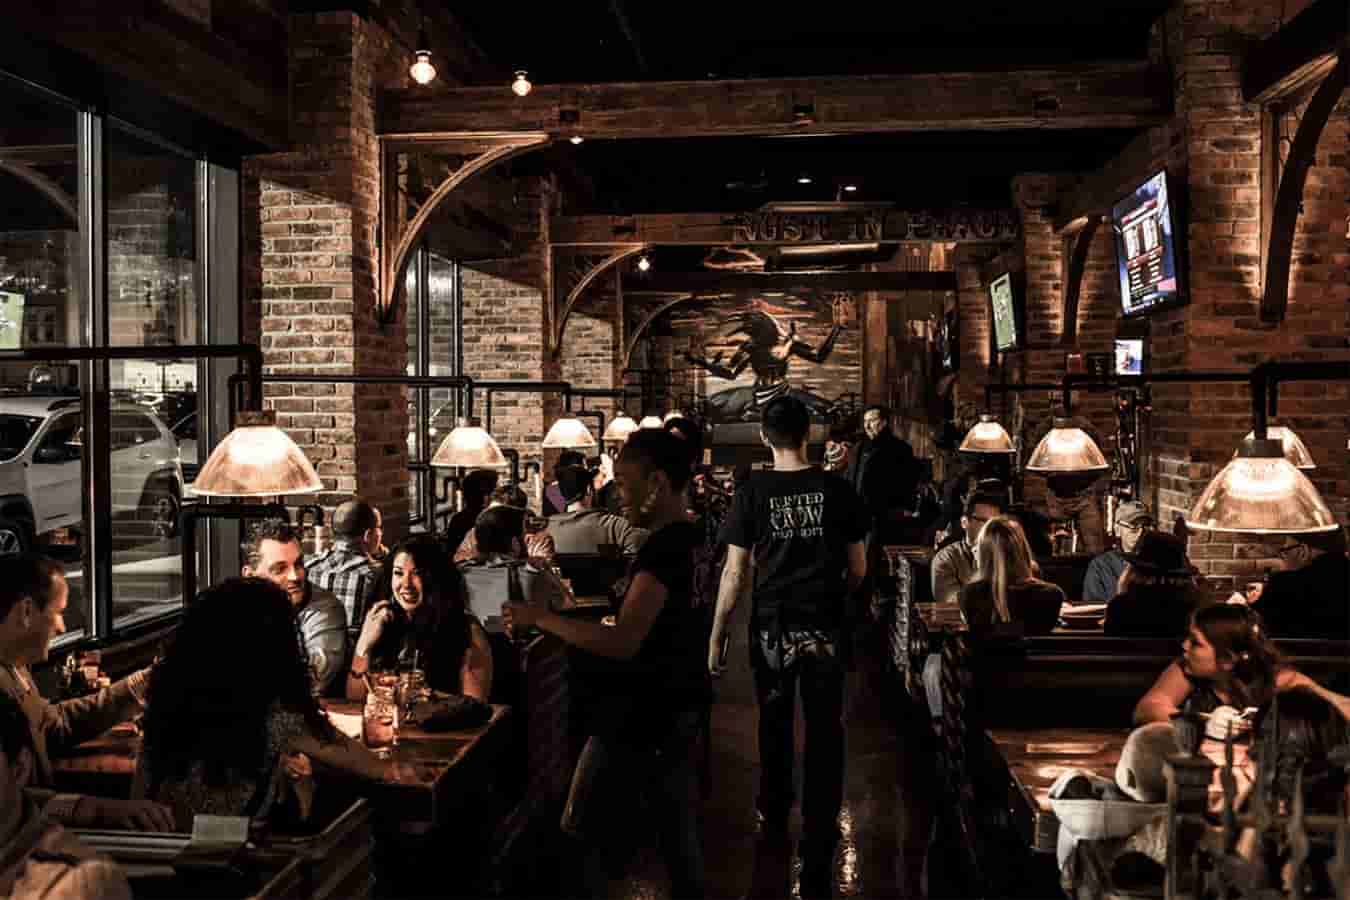 Image | dimly lit restaurant interior